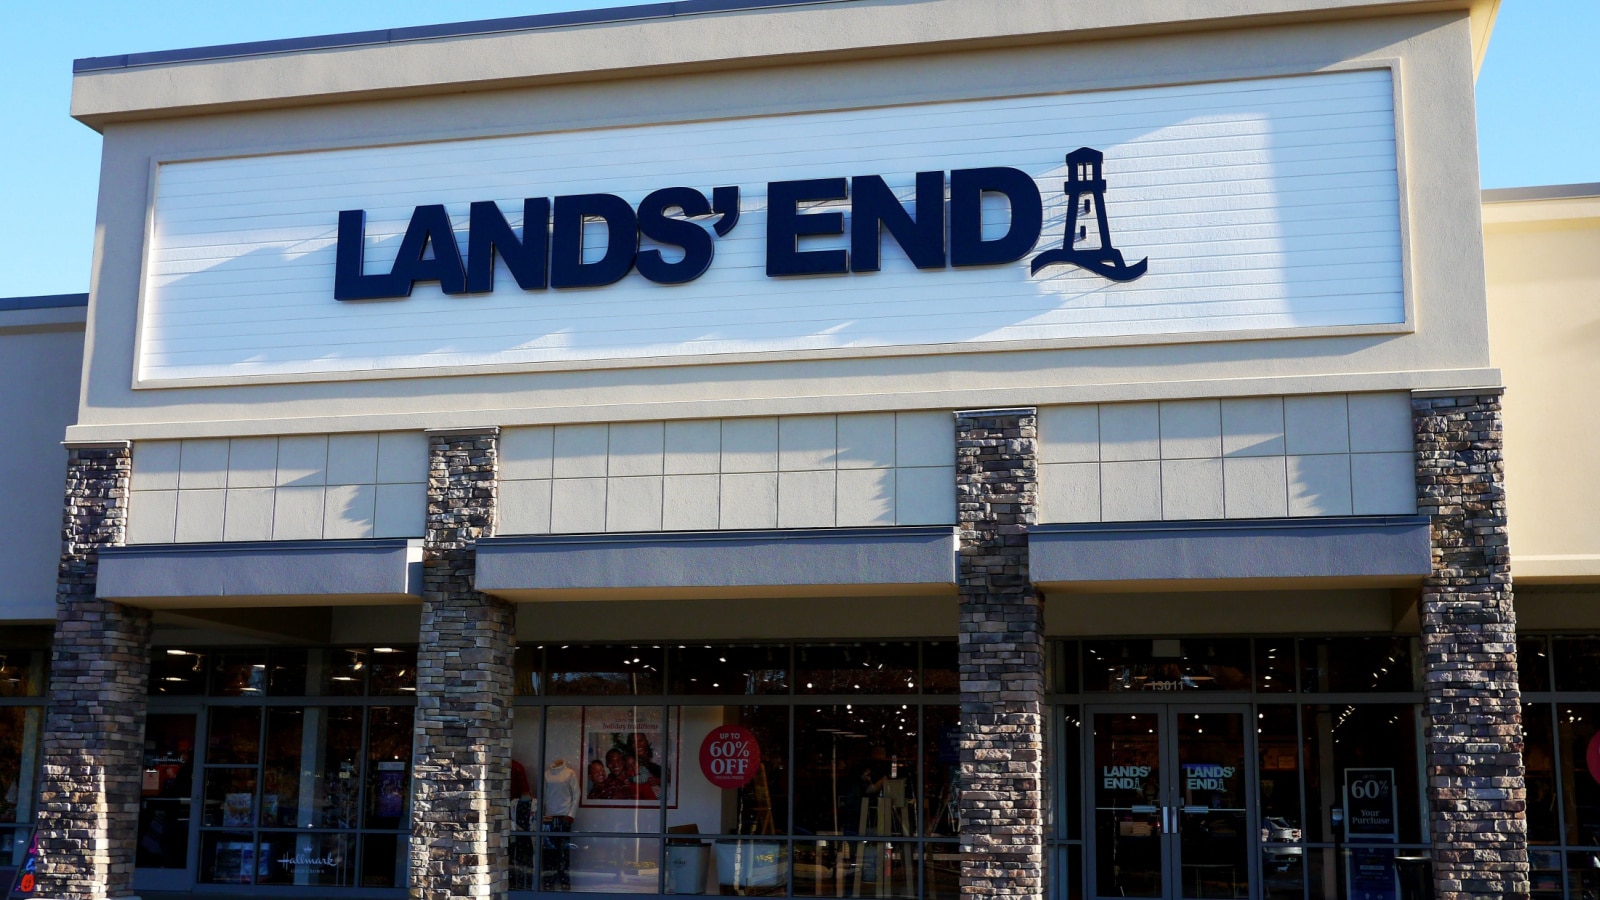 Lands' End Store Exterior in Fairfax, VA, USA, October 29, 2022